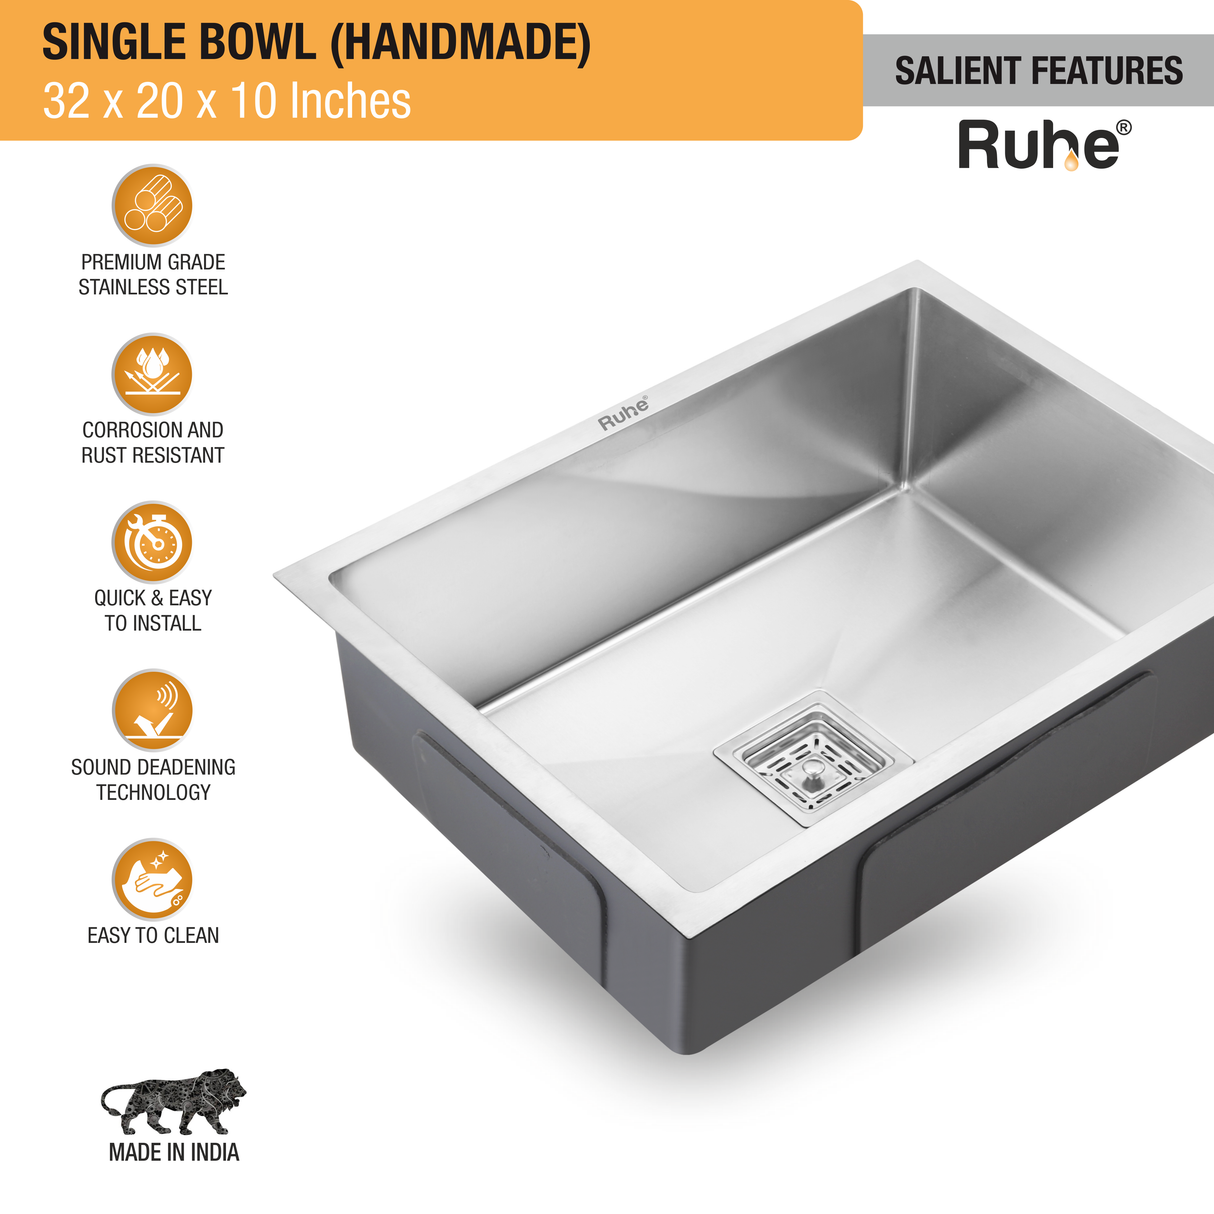 Handmade Single Bowl Premium Kitchen Sink (32 x 20 x 10 Inches) features